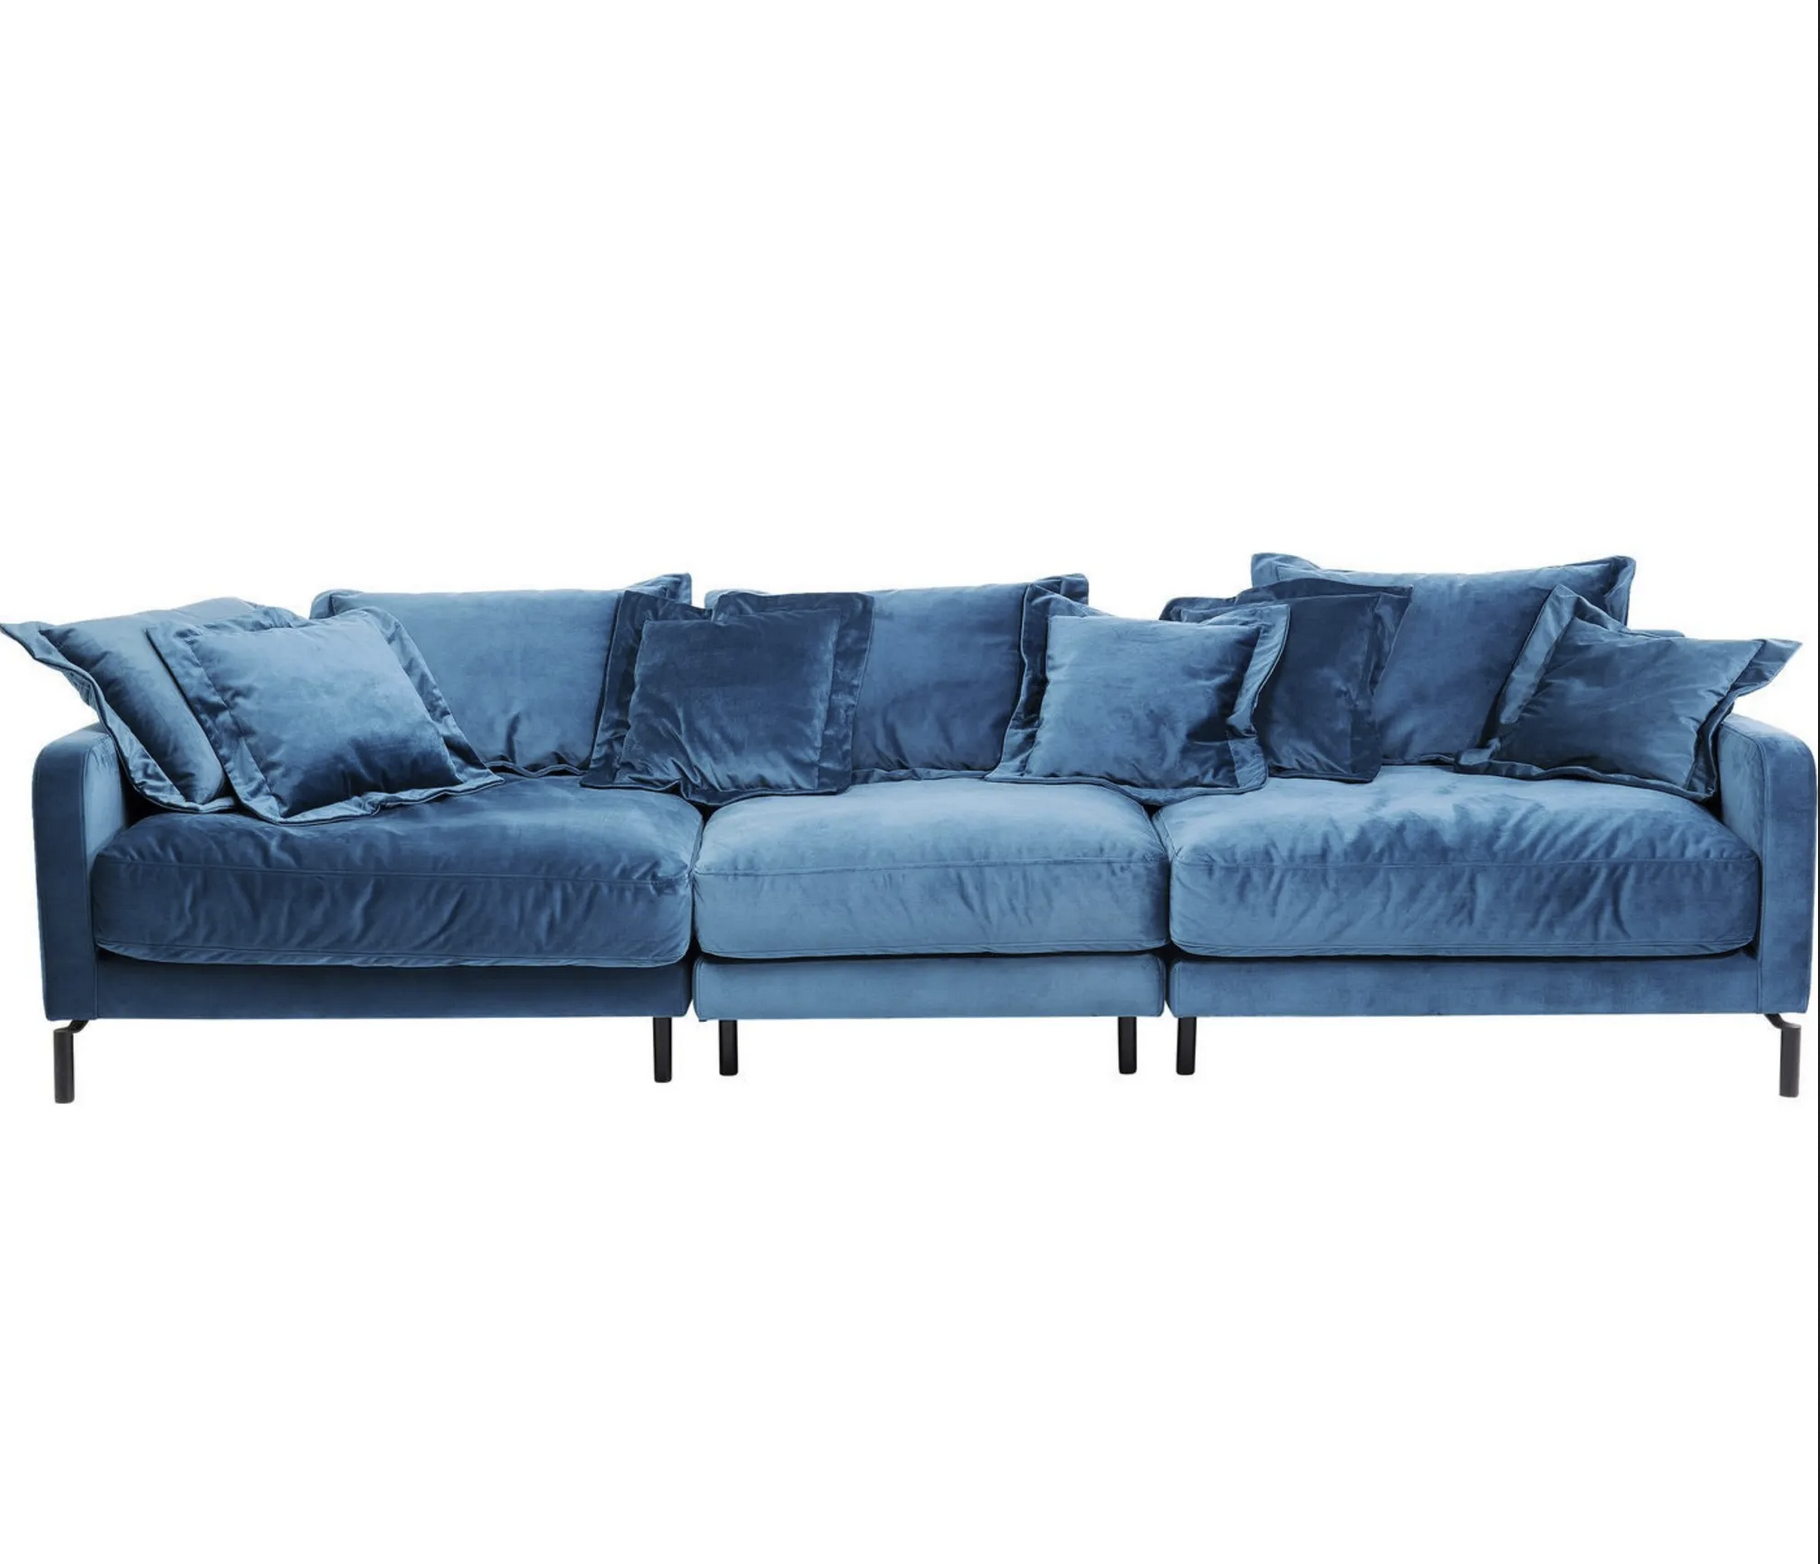 Un sofá de terciopelo azul para toda la familia de Maisons du Monde.